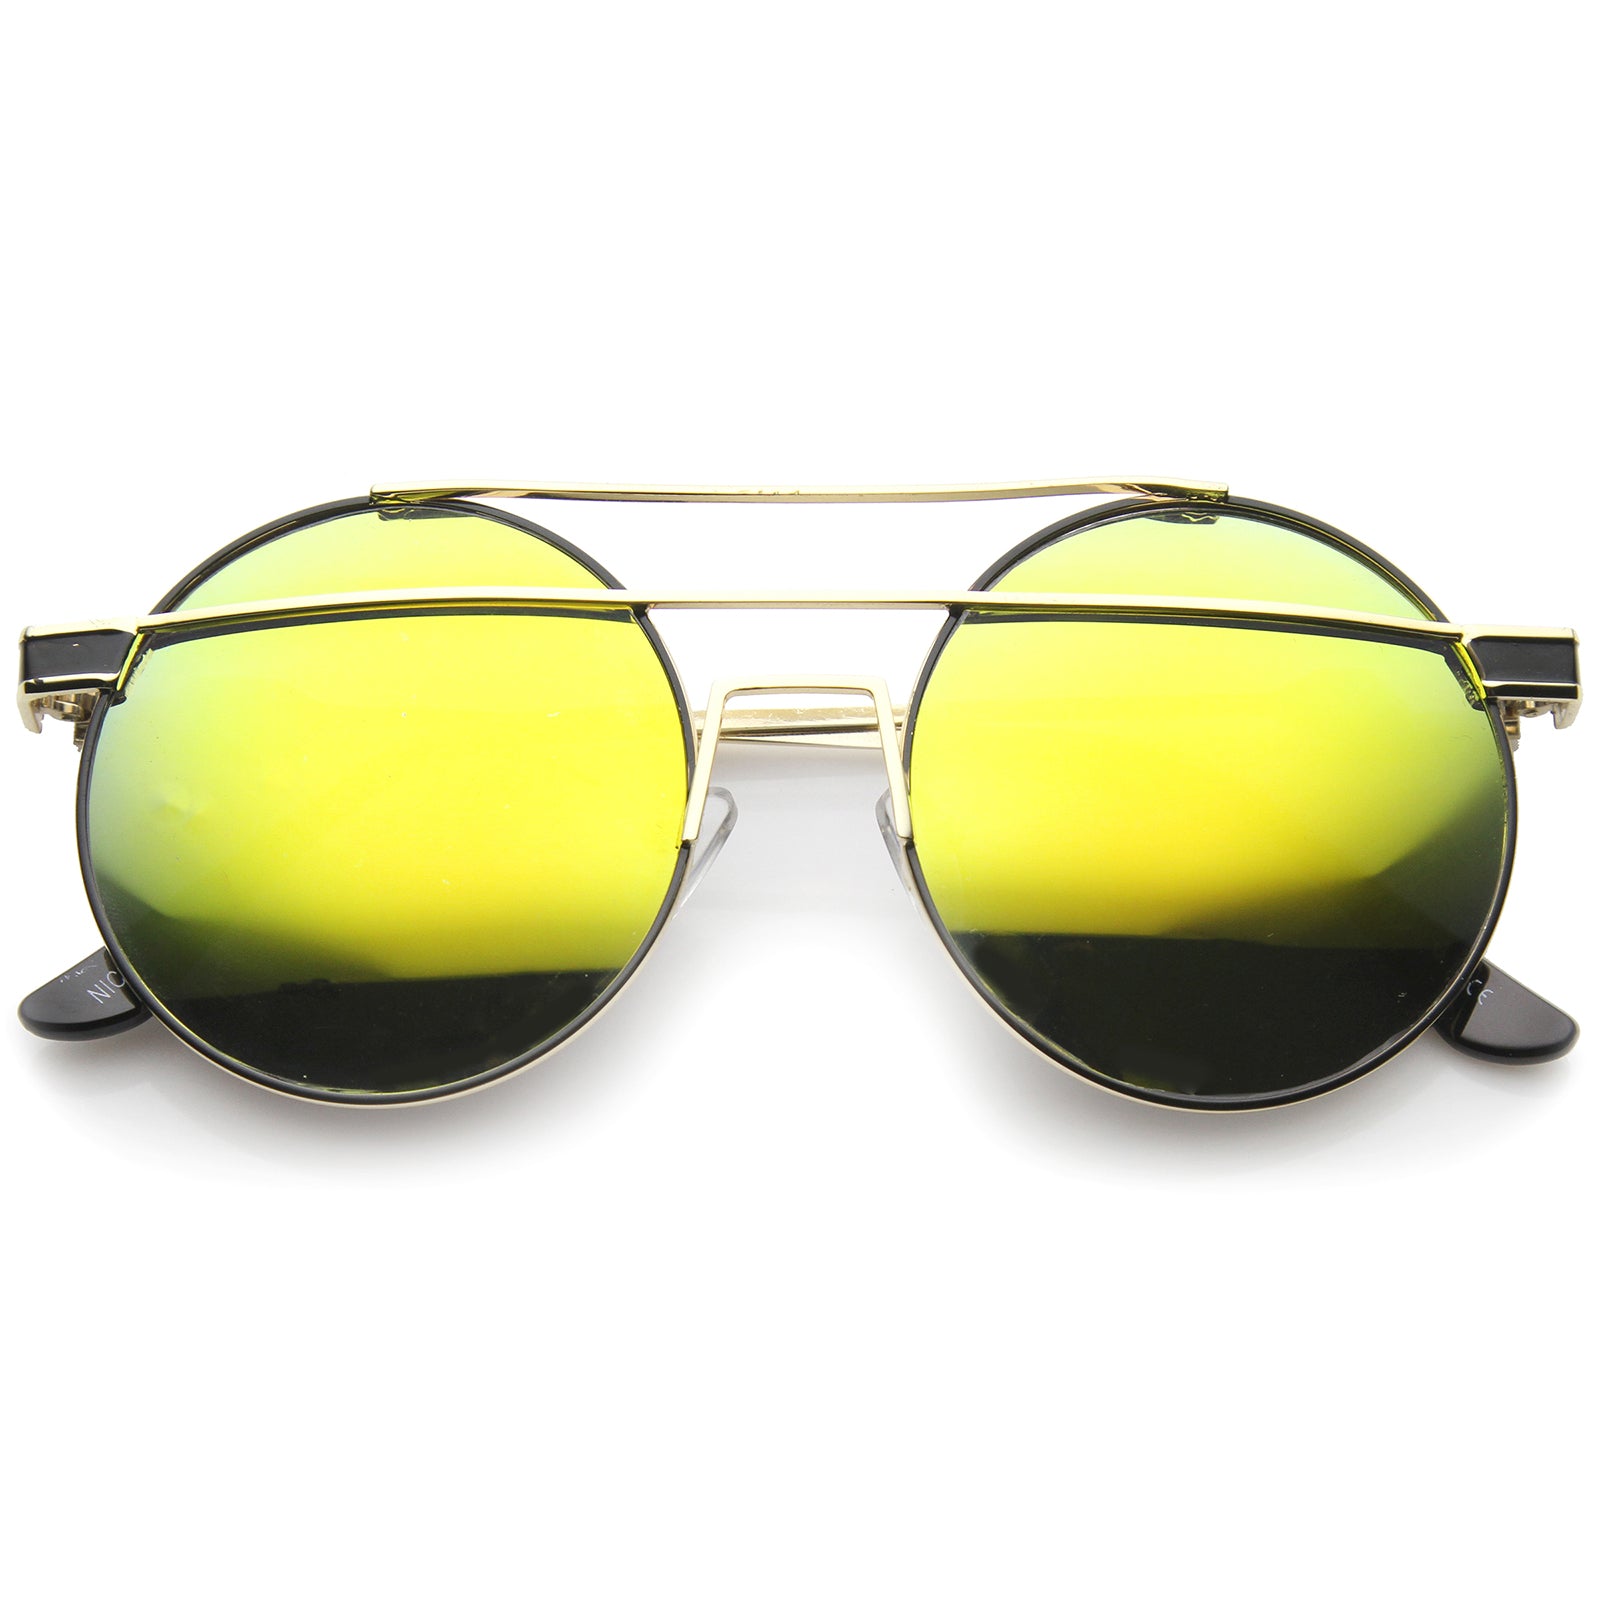 Modern Metal Frame Double Bridge Colored Mirror Lens Round Sunglasses 59mm, Gold-Black / Yellow Mirror